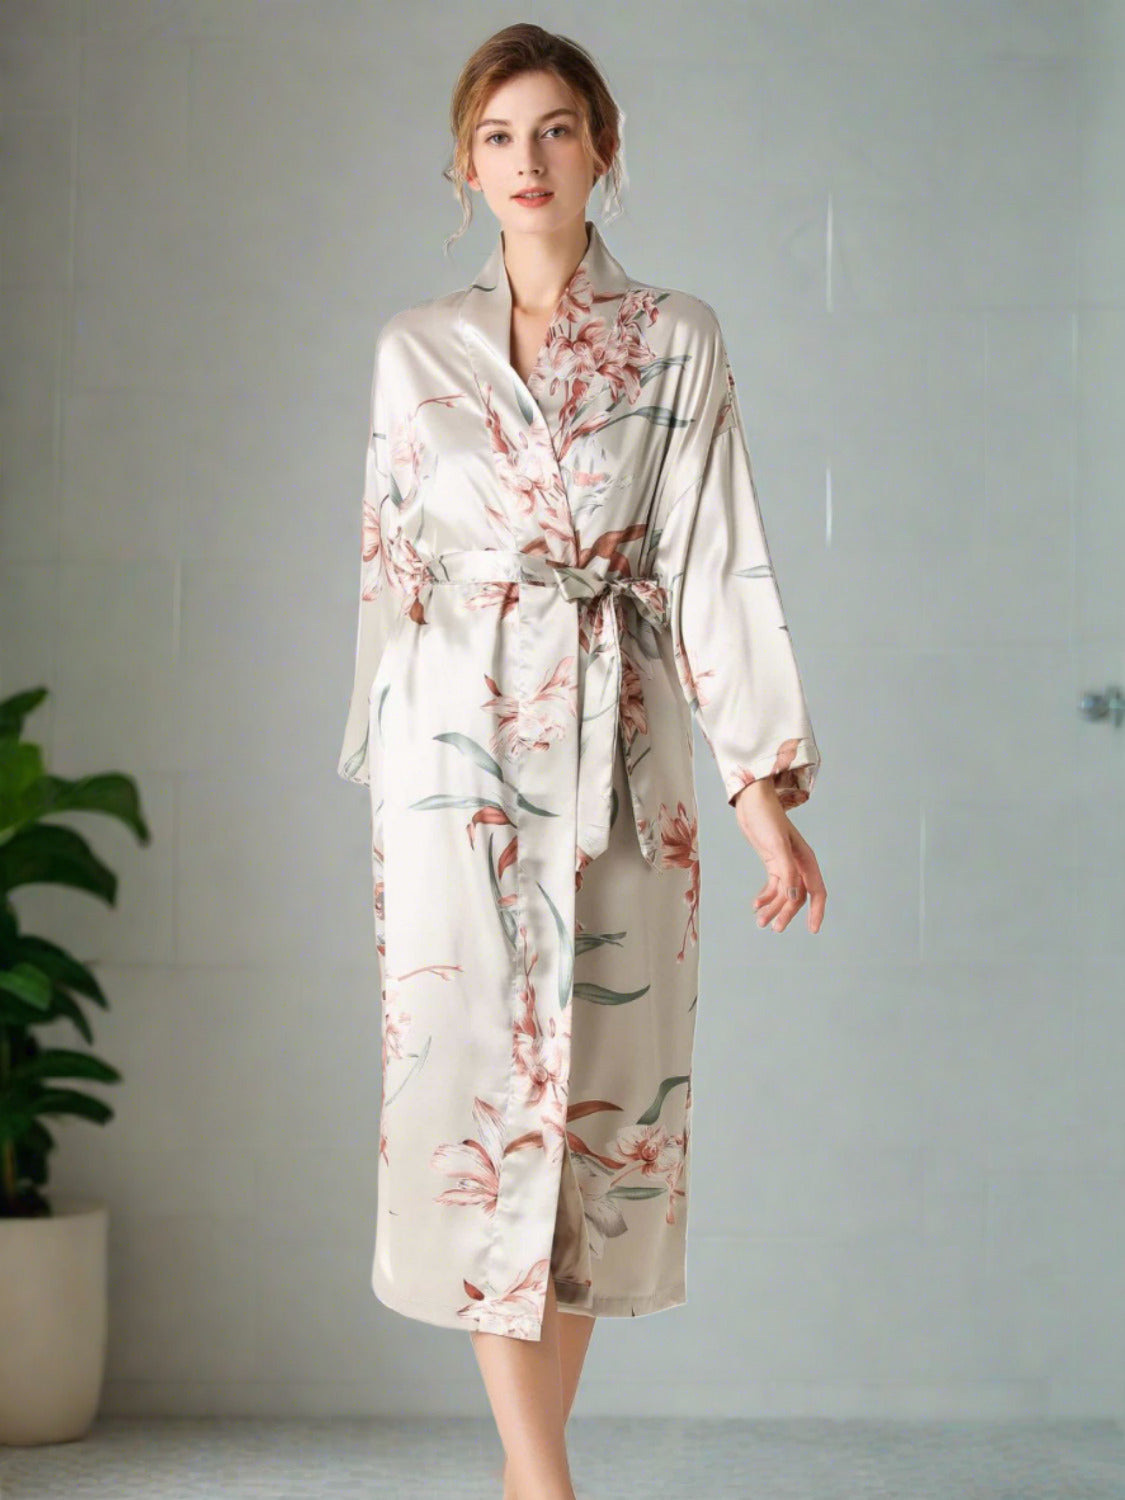 Model walking wearing light gray floral patterned robe